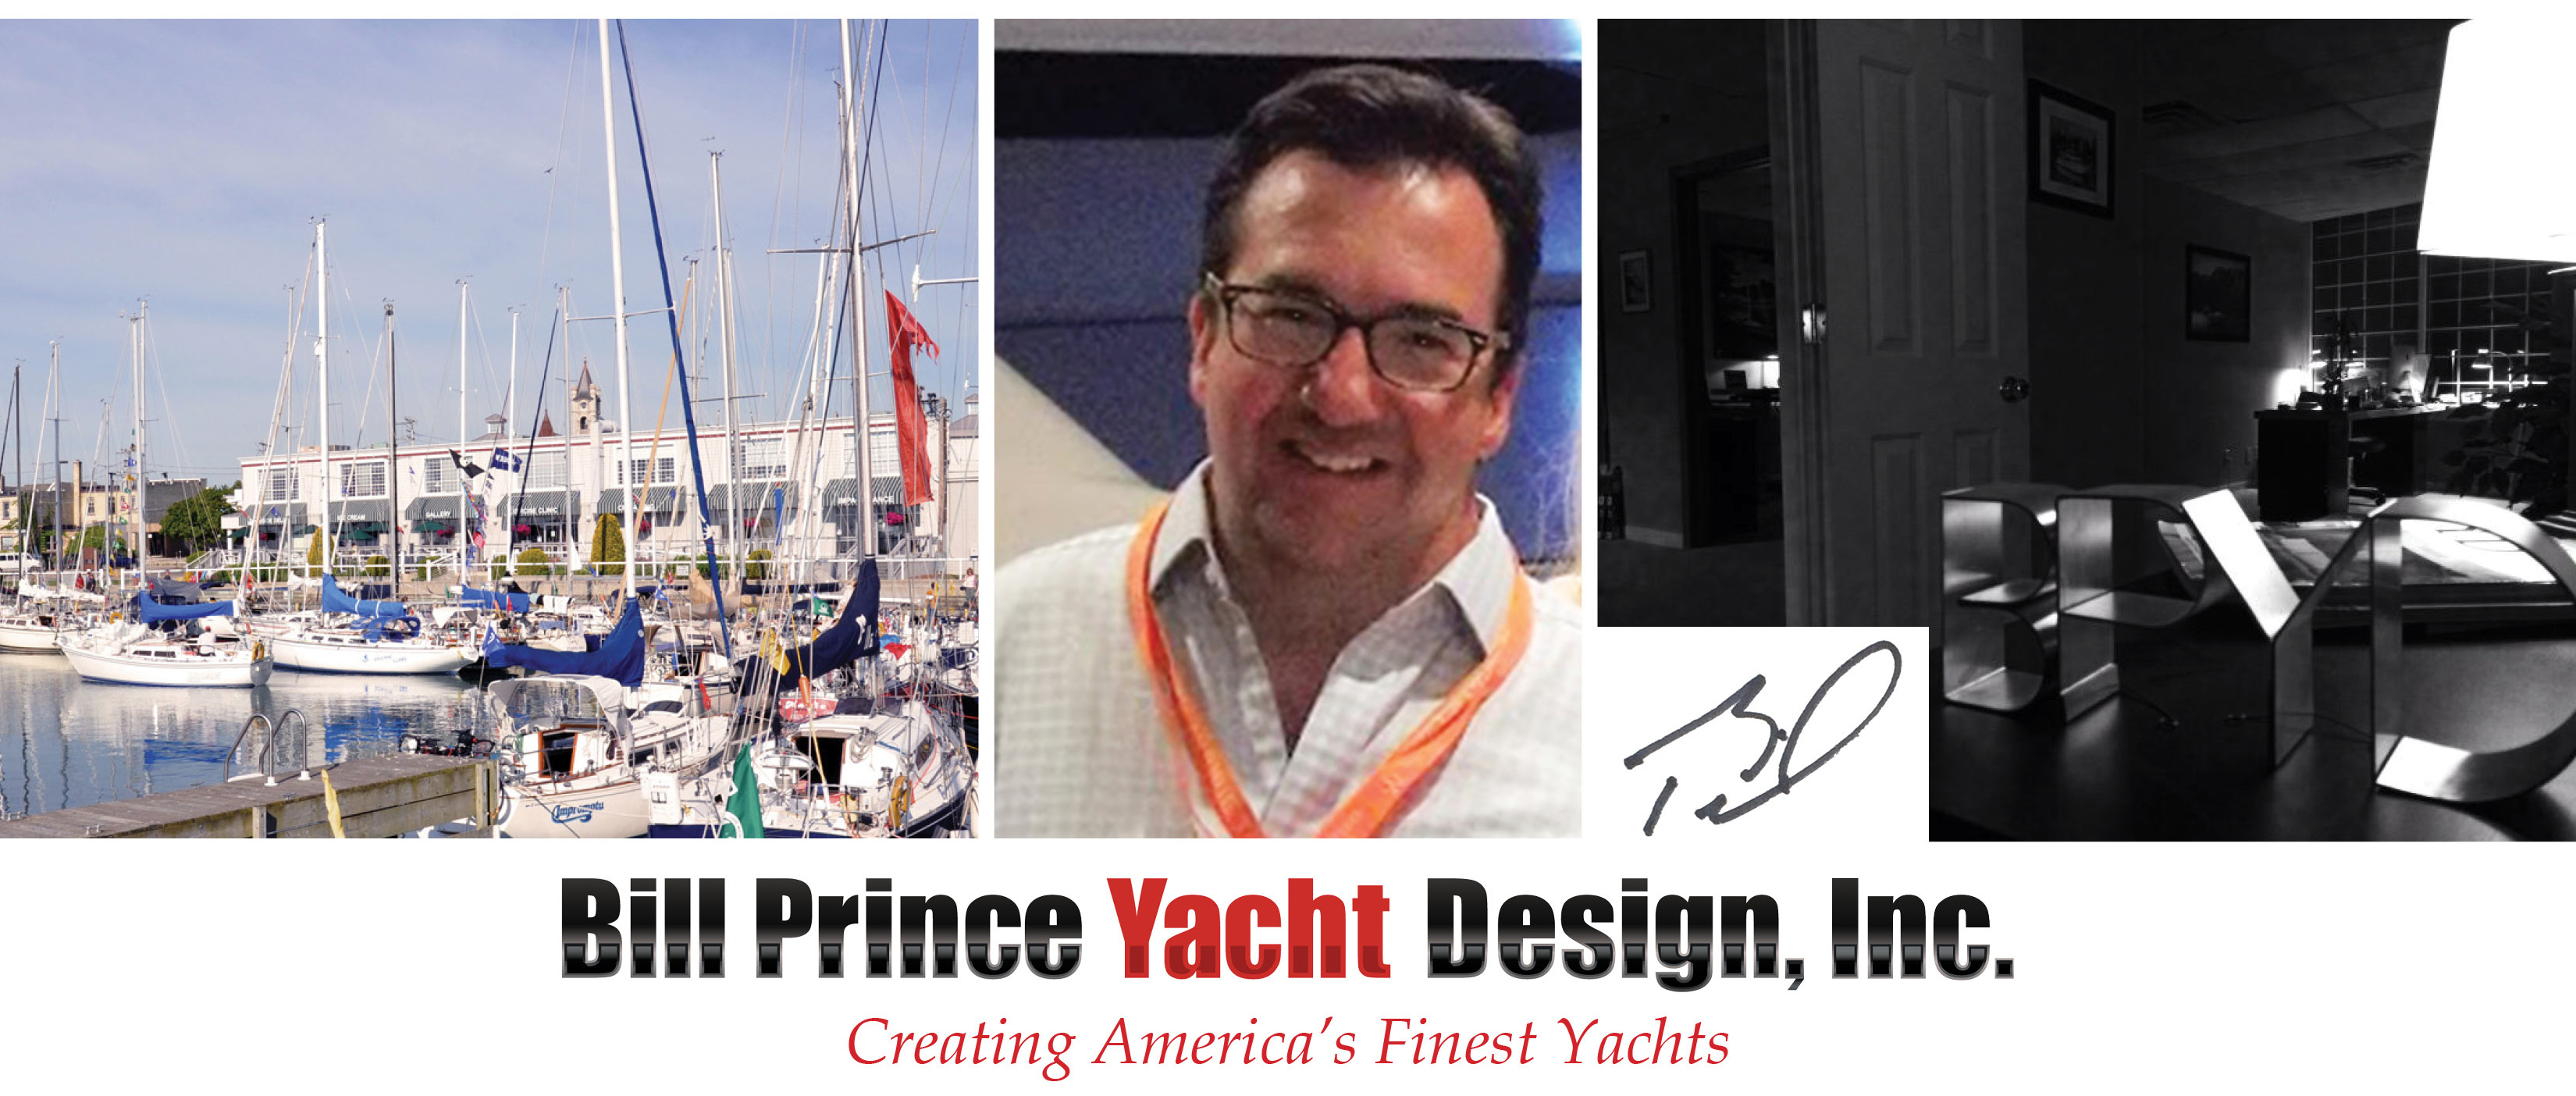 Bill Prince Yacht Design Collage